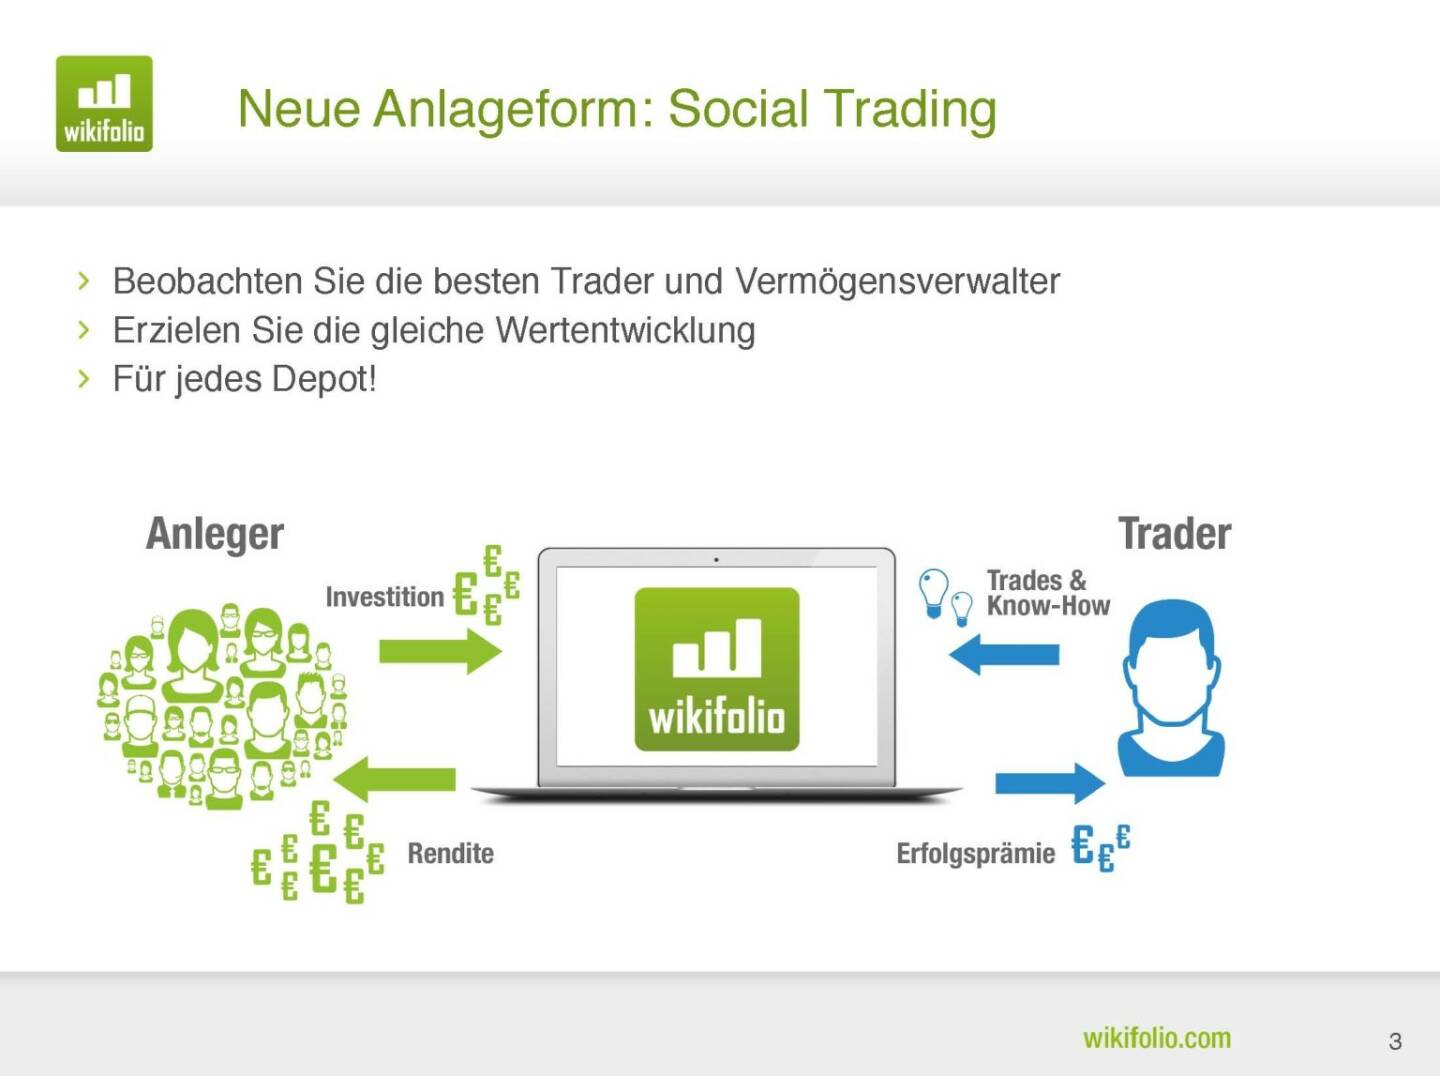 wikifolio.com - Neue Anlageform: Social Trading